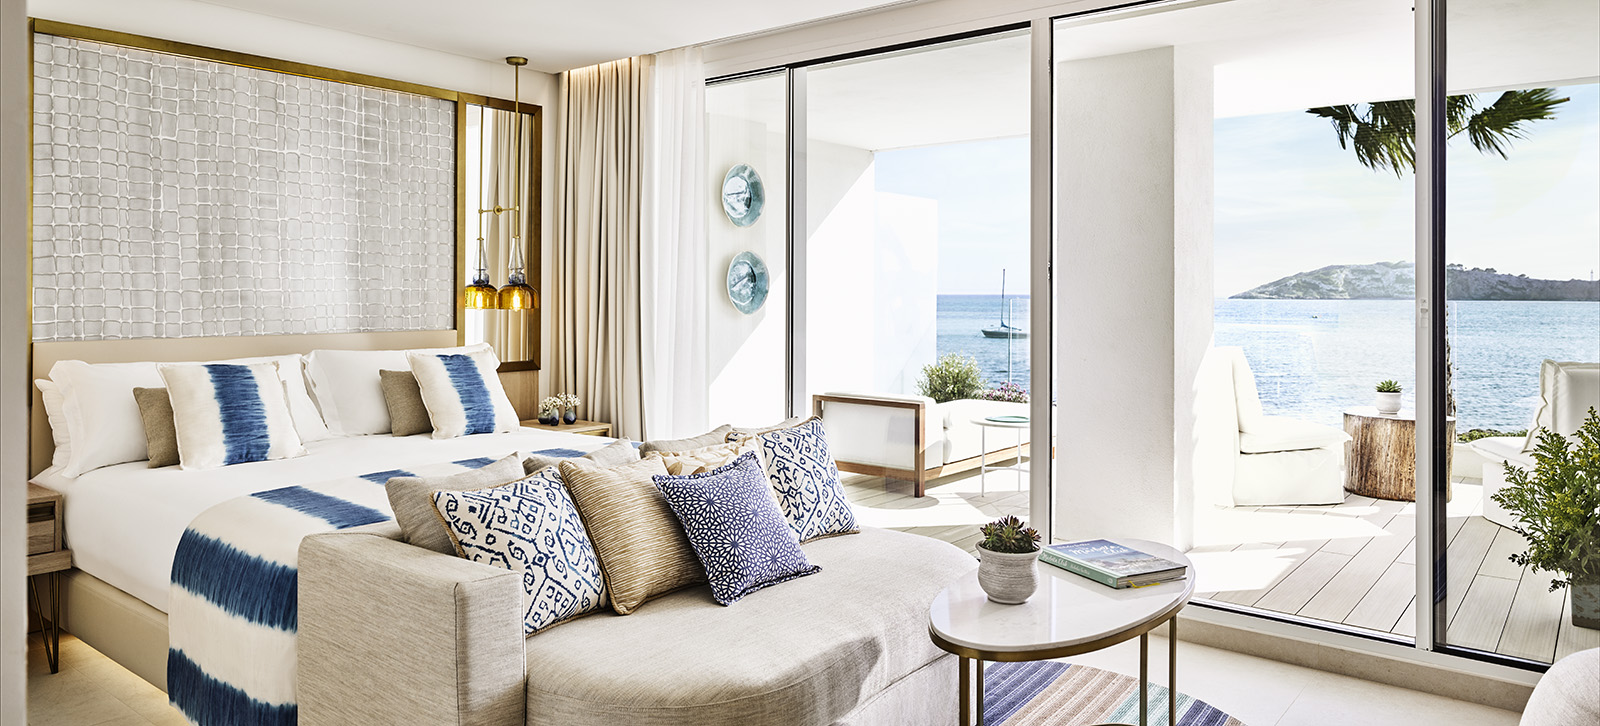 Robert de Niro eröffnet Luxus Hotel auf Ibiza 2